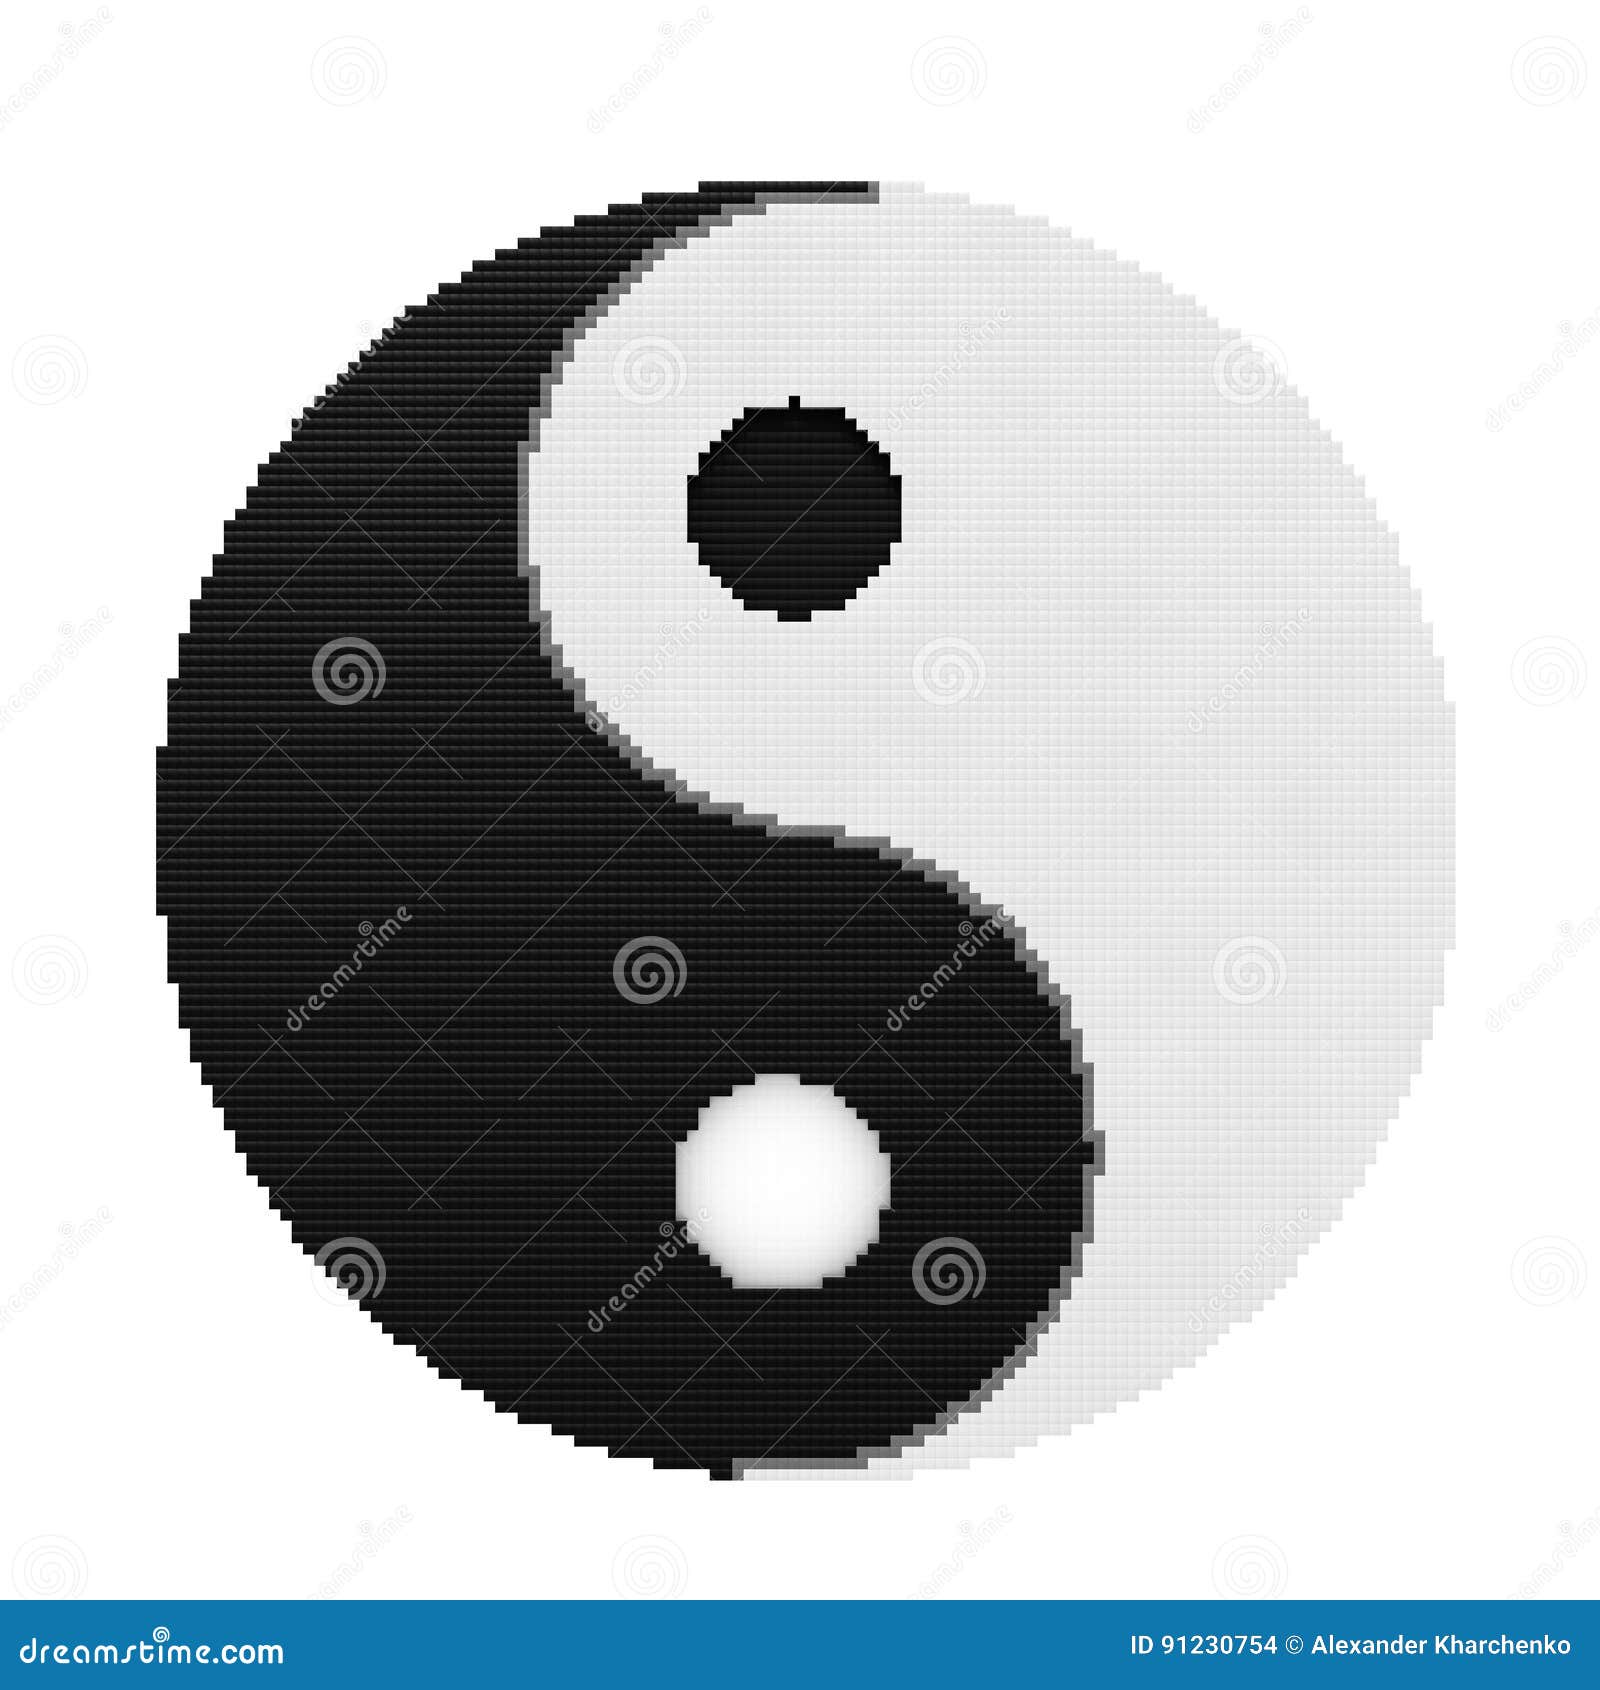 Yin Yang Symbol Of Harmony And Balance In Pixel Art Style